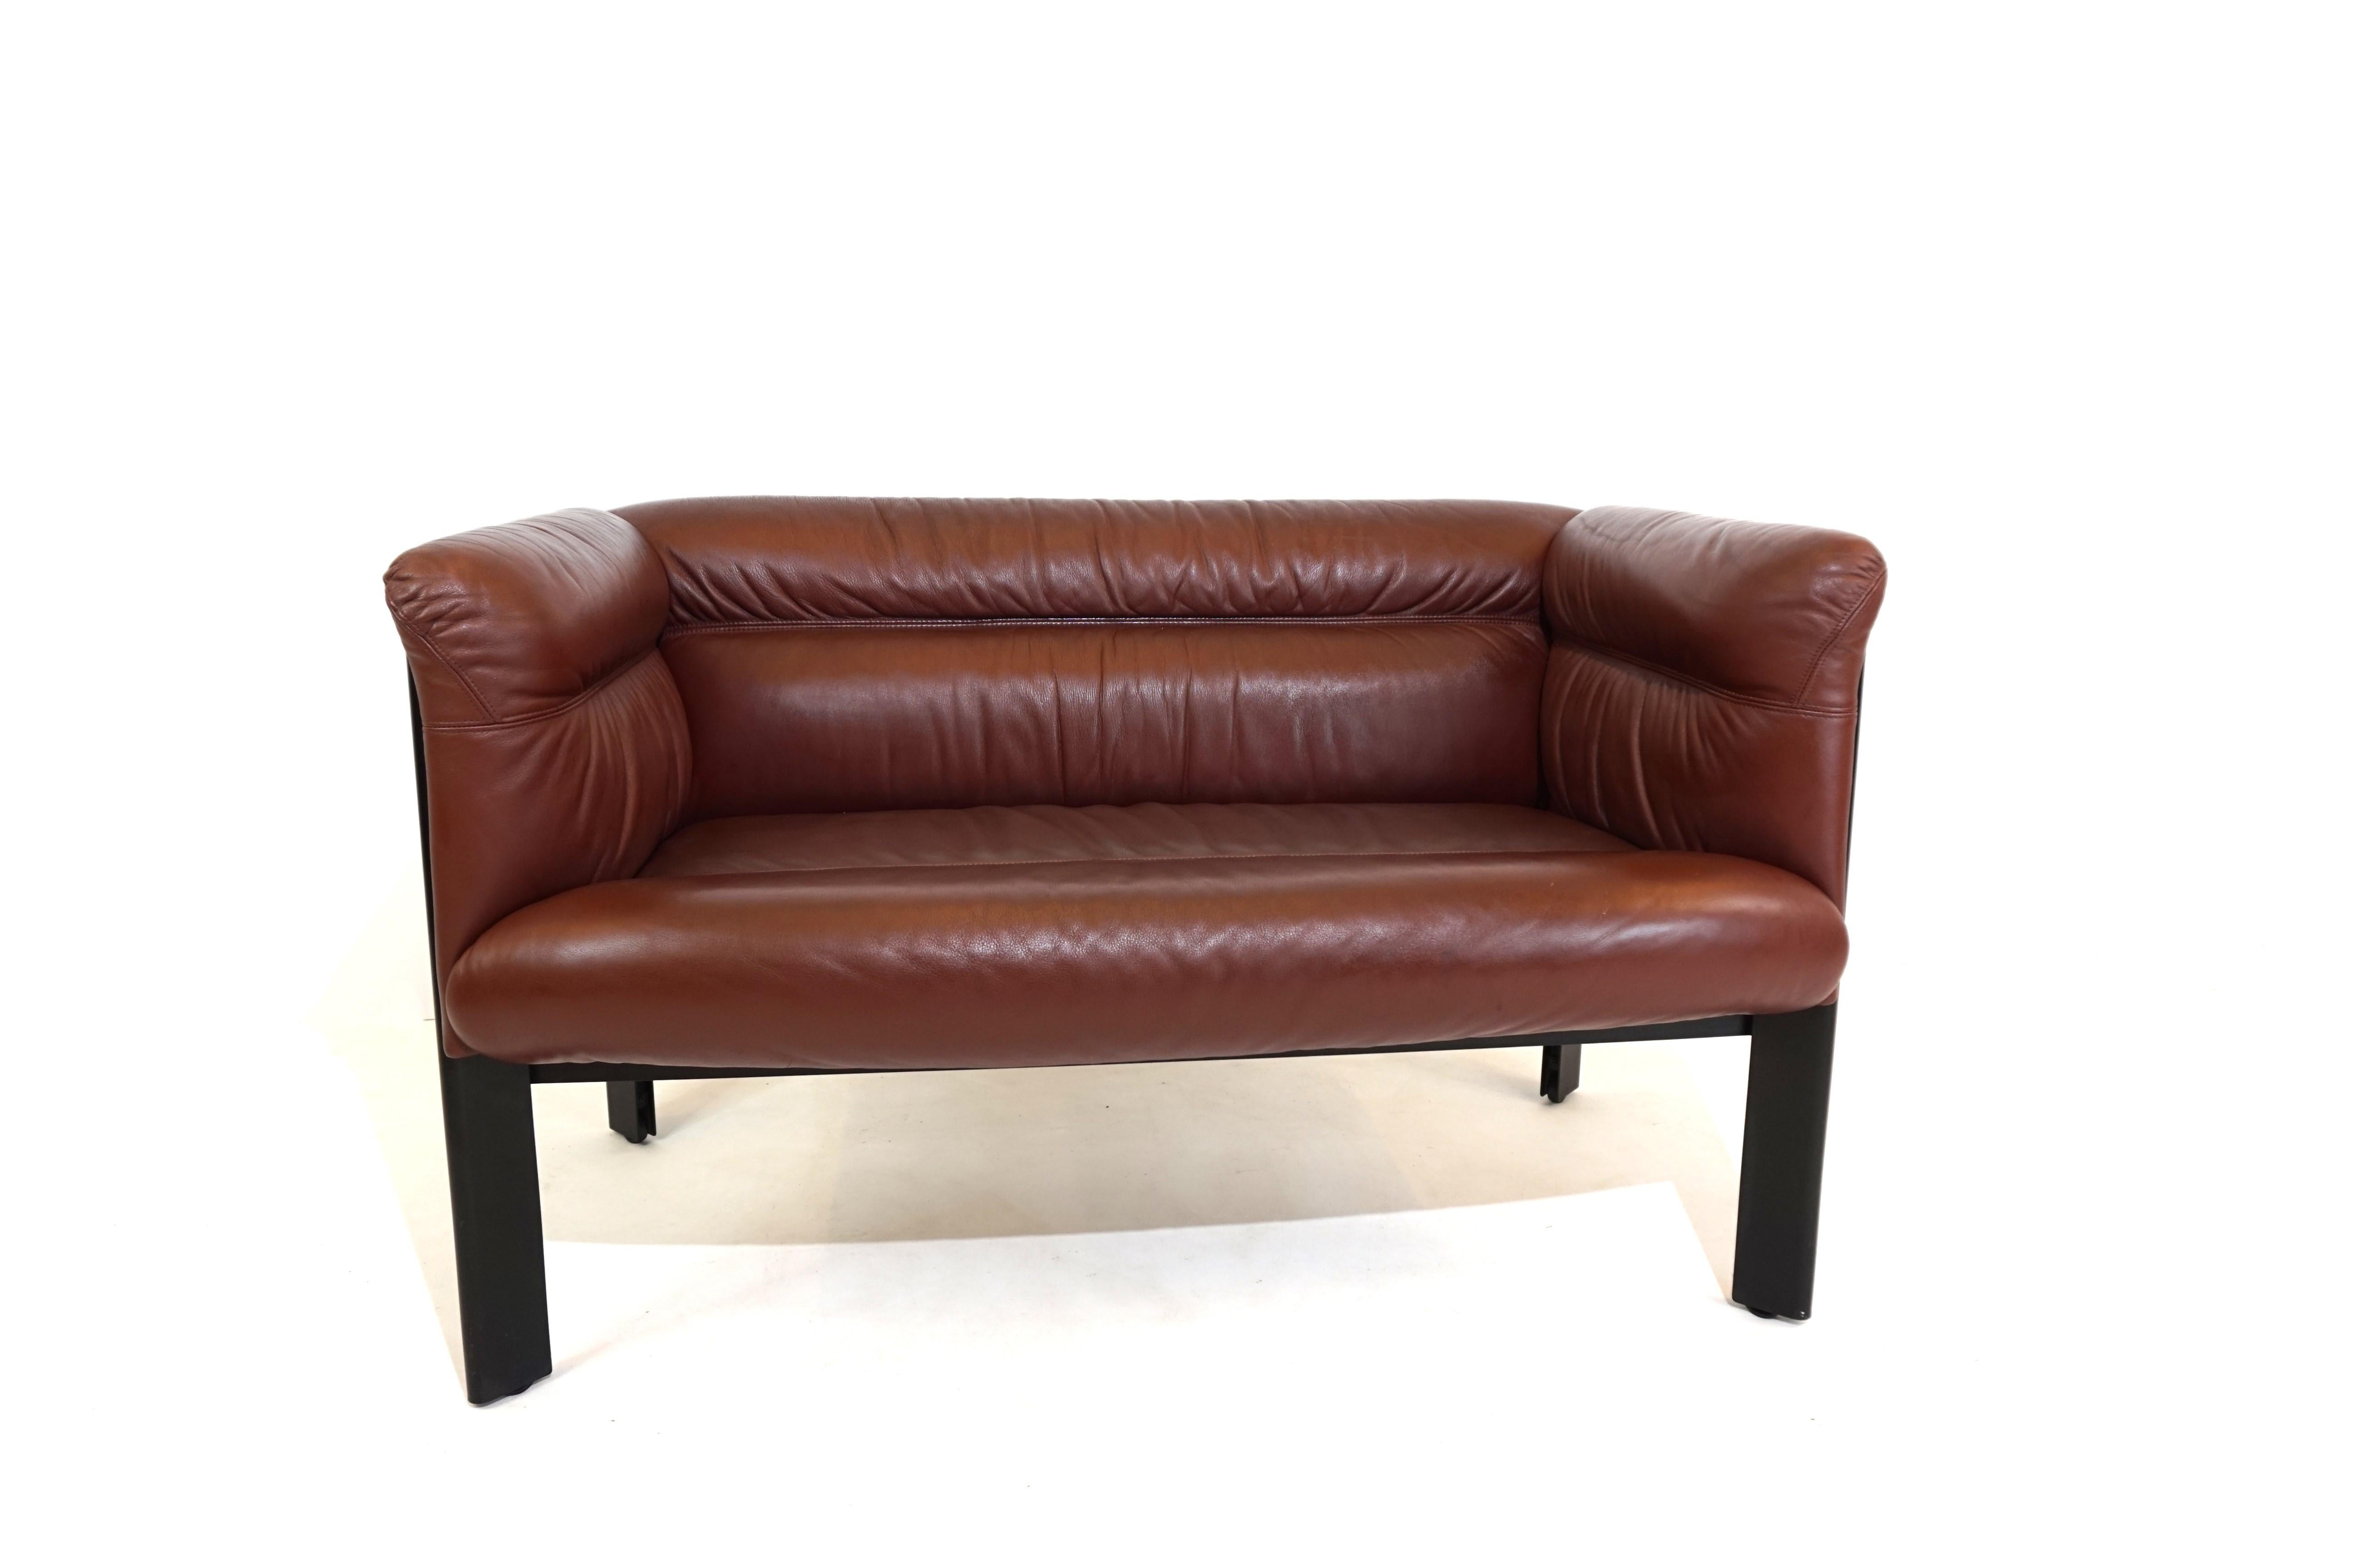 Post-Modern Poltrona Frau Interlude leather bench 2 seater by Marco Zanuso